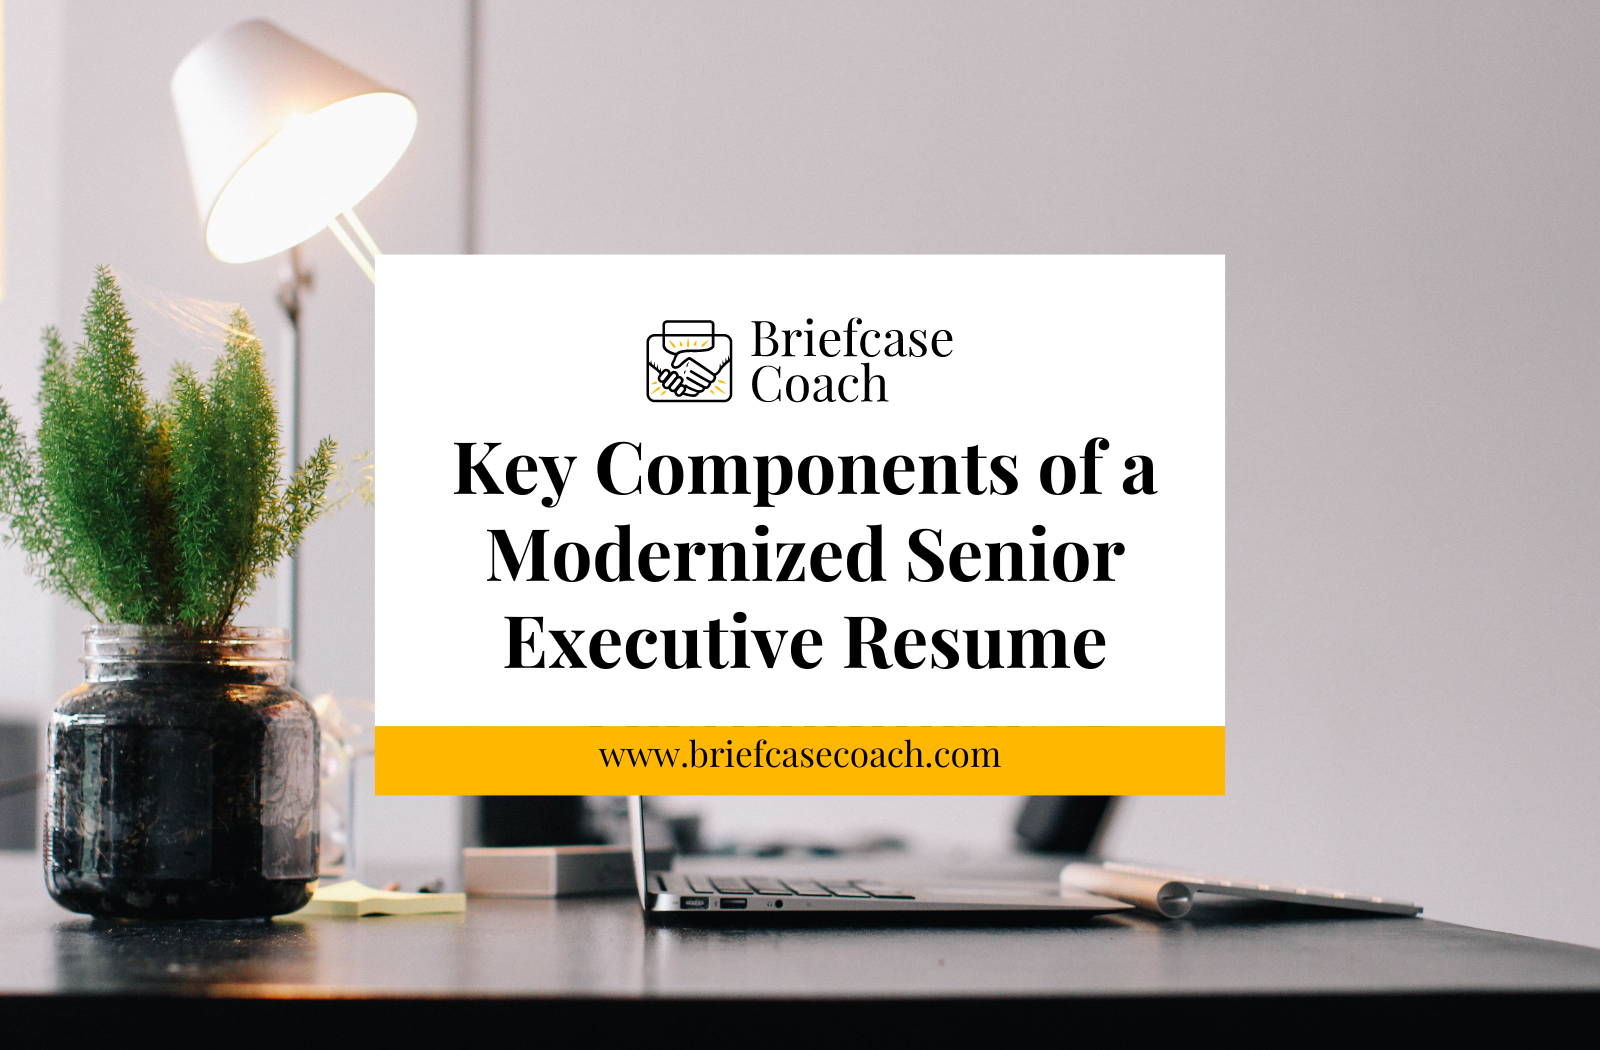 Key Components of a Modernized Senior Executive Resume